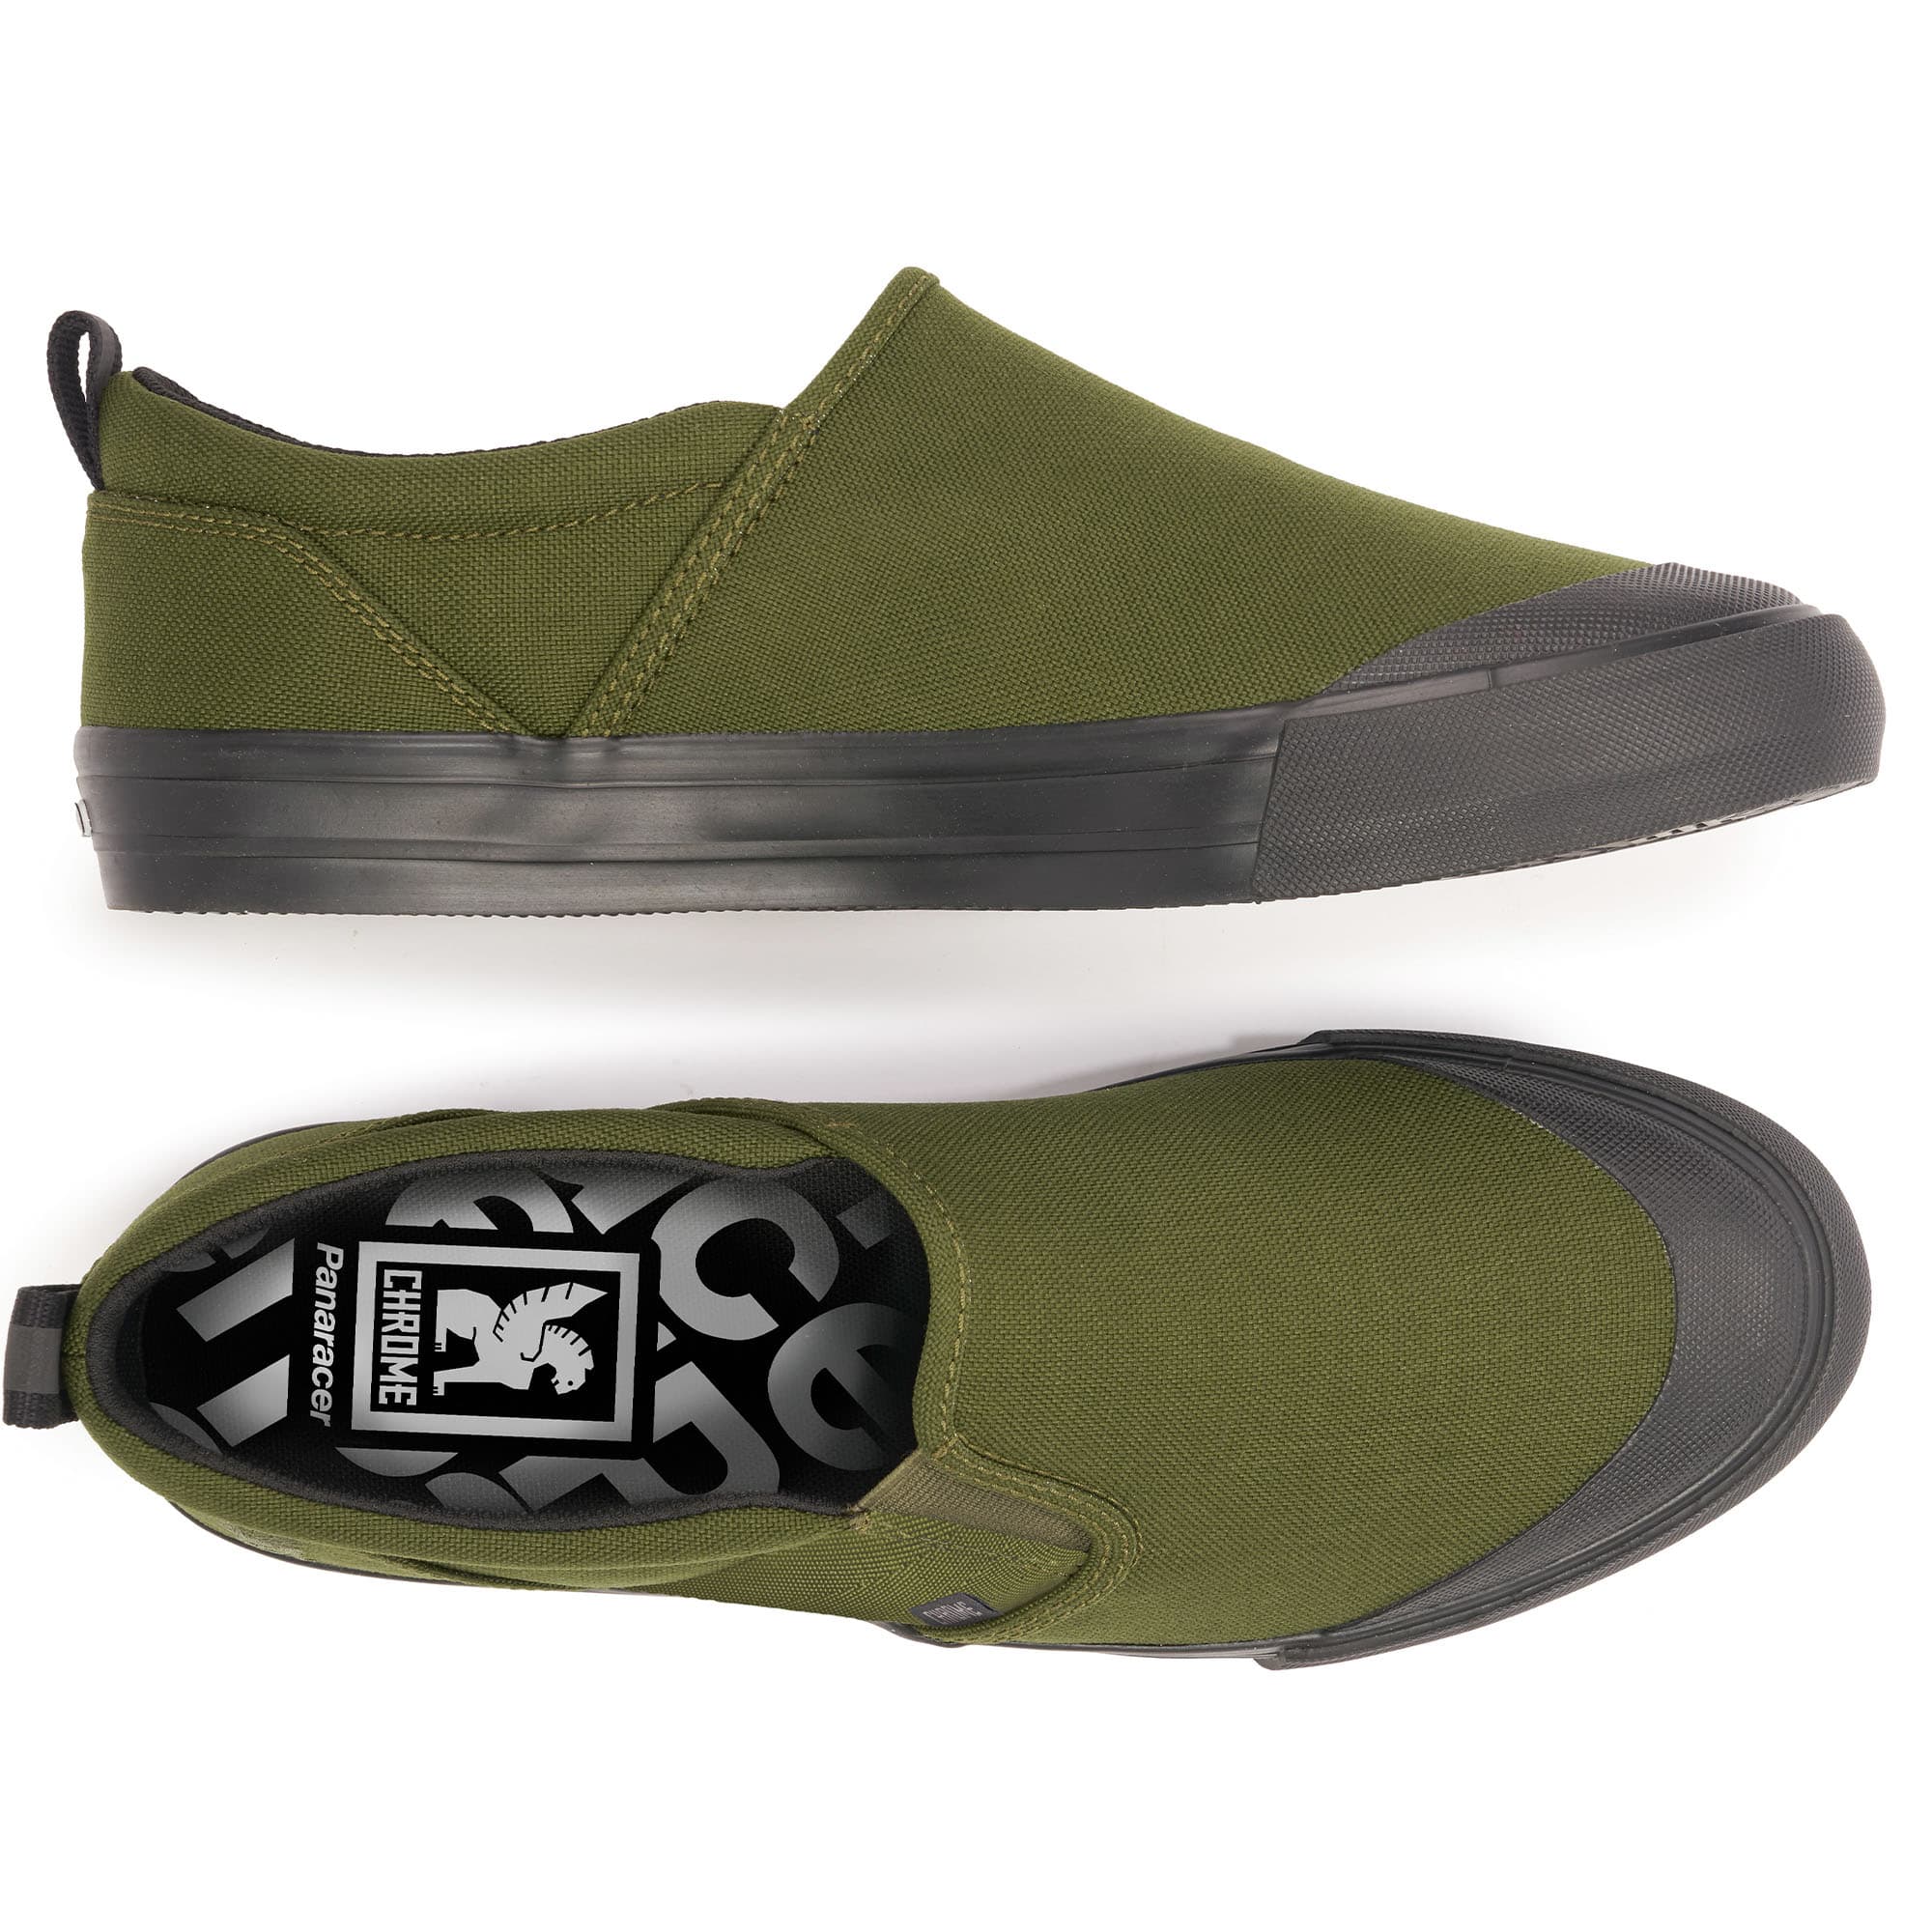 Dima 3.0 Slip-On Sneaker in green inside view #color_olive leaf